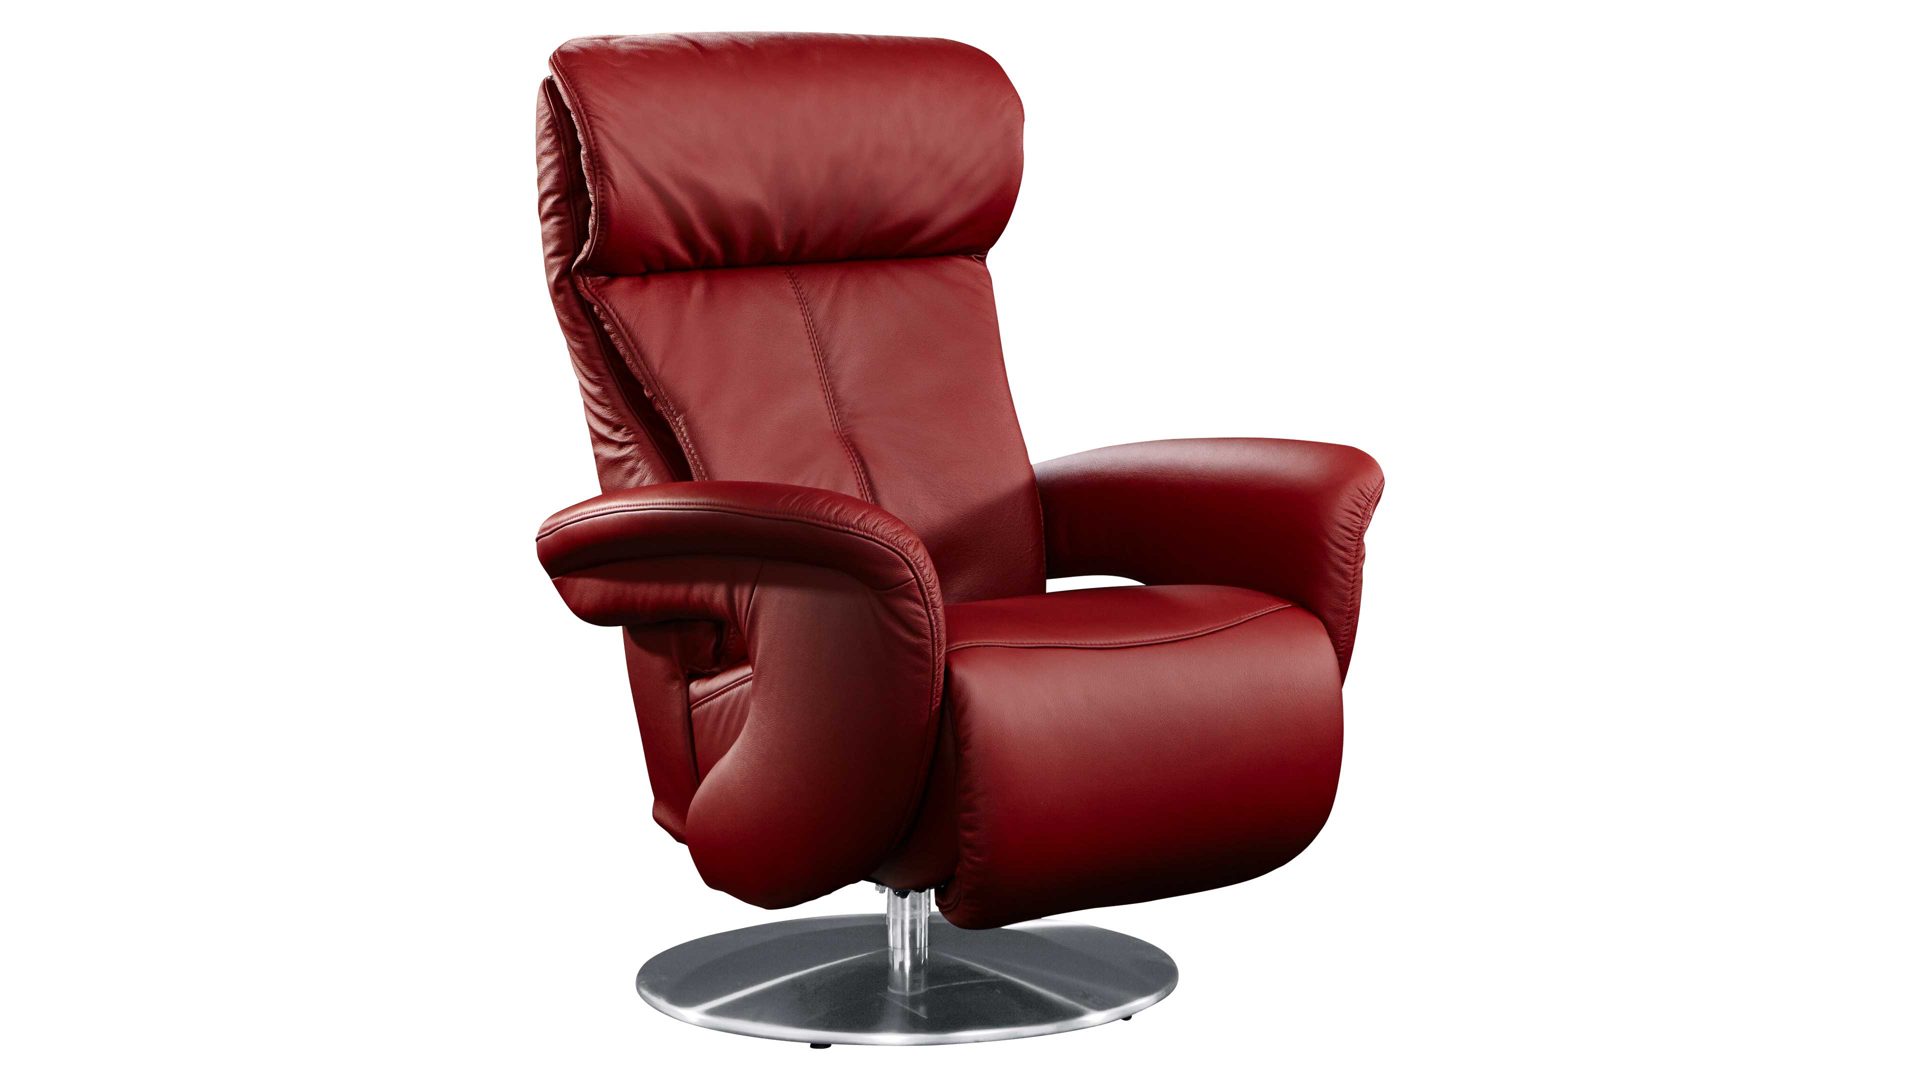 Relaxsessel comfortmaster besser sitzen, liegen, leben aus Leder in Dunkelrot Comfortmaster 7333 Easy-Swing-Sessel 36N als Sitzmöbel chillifarbenes LongLife-Leder & Metall-Tellerfuß